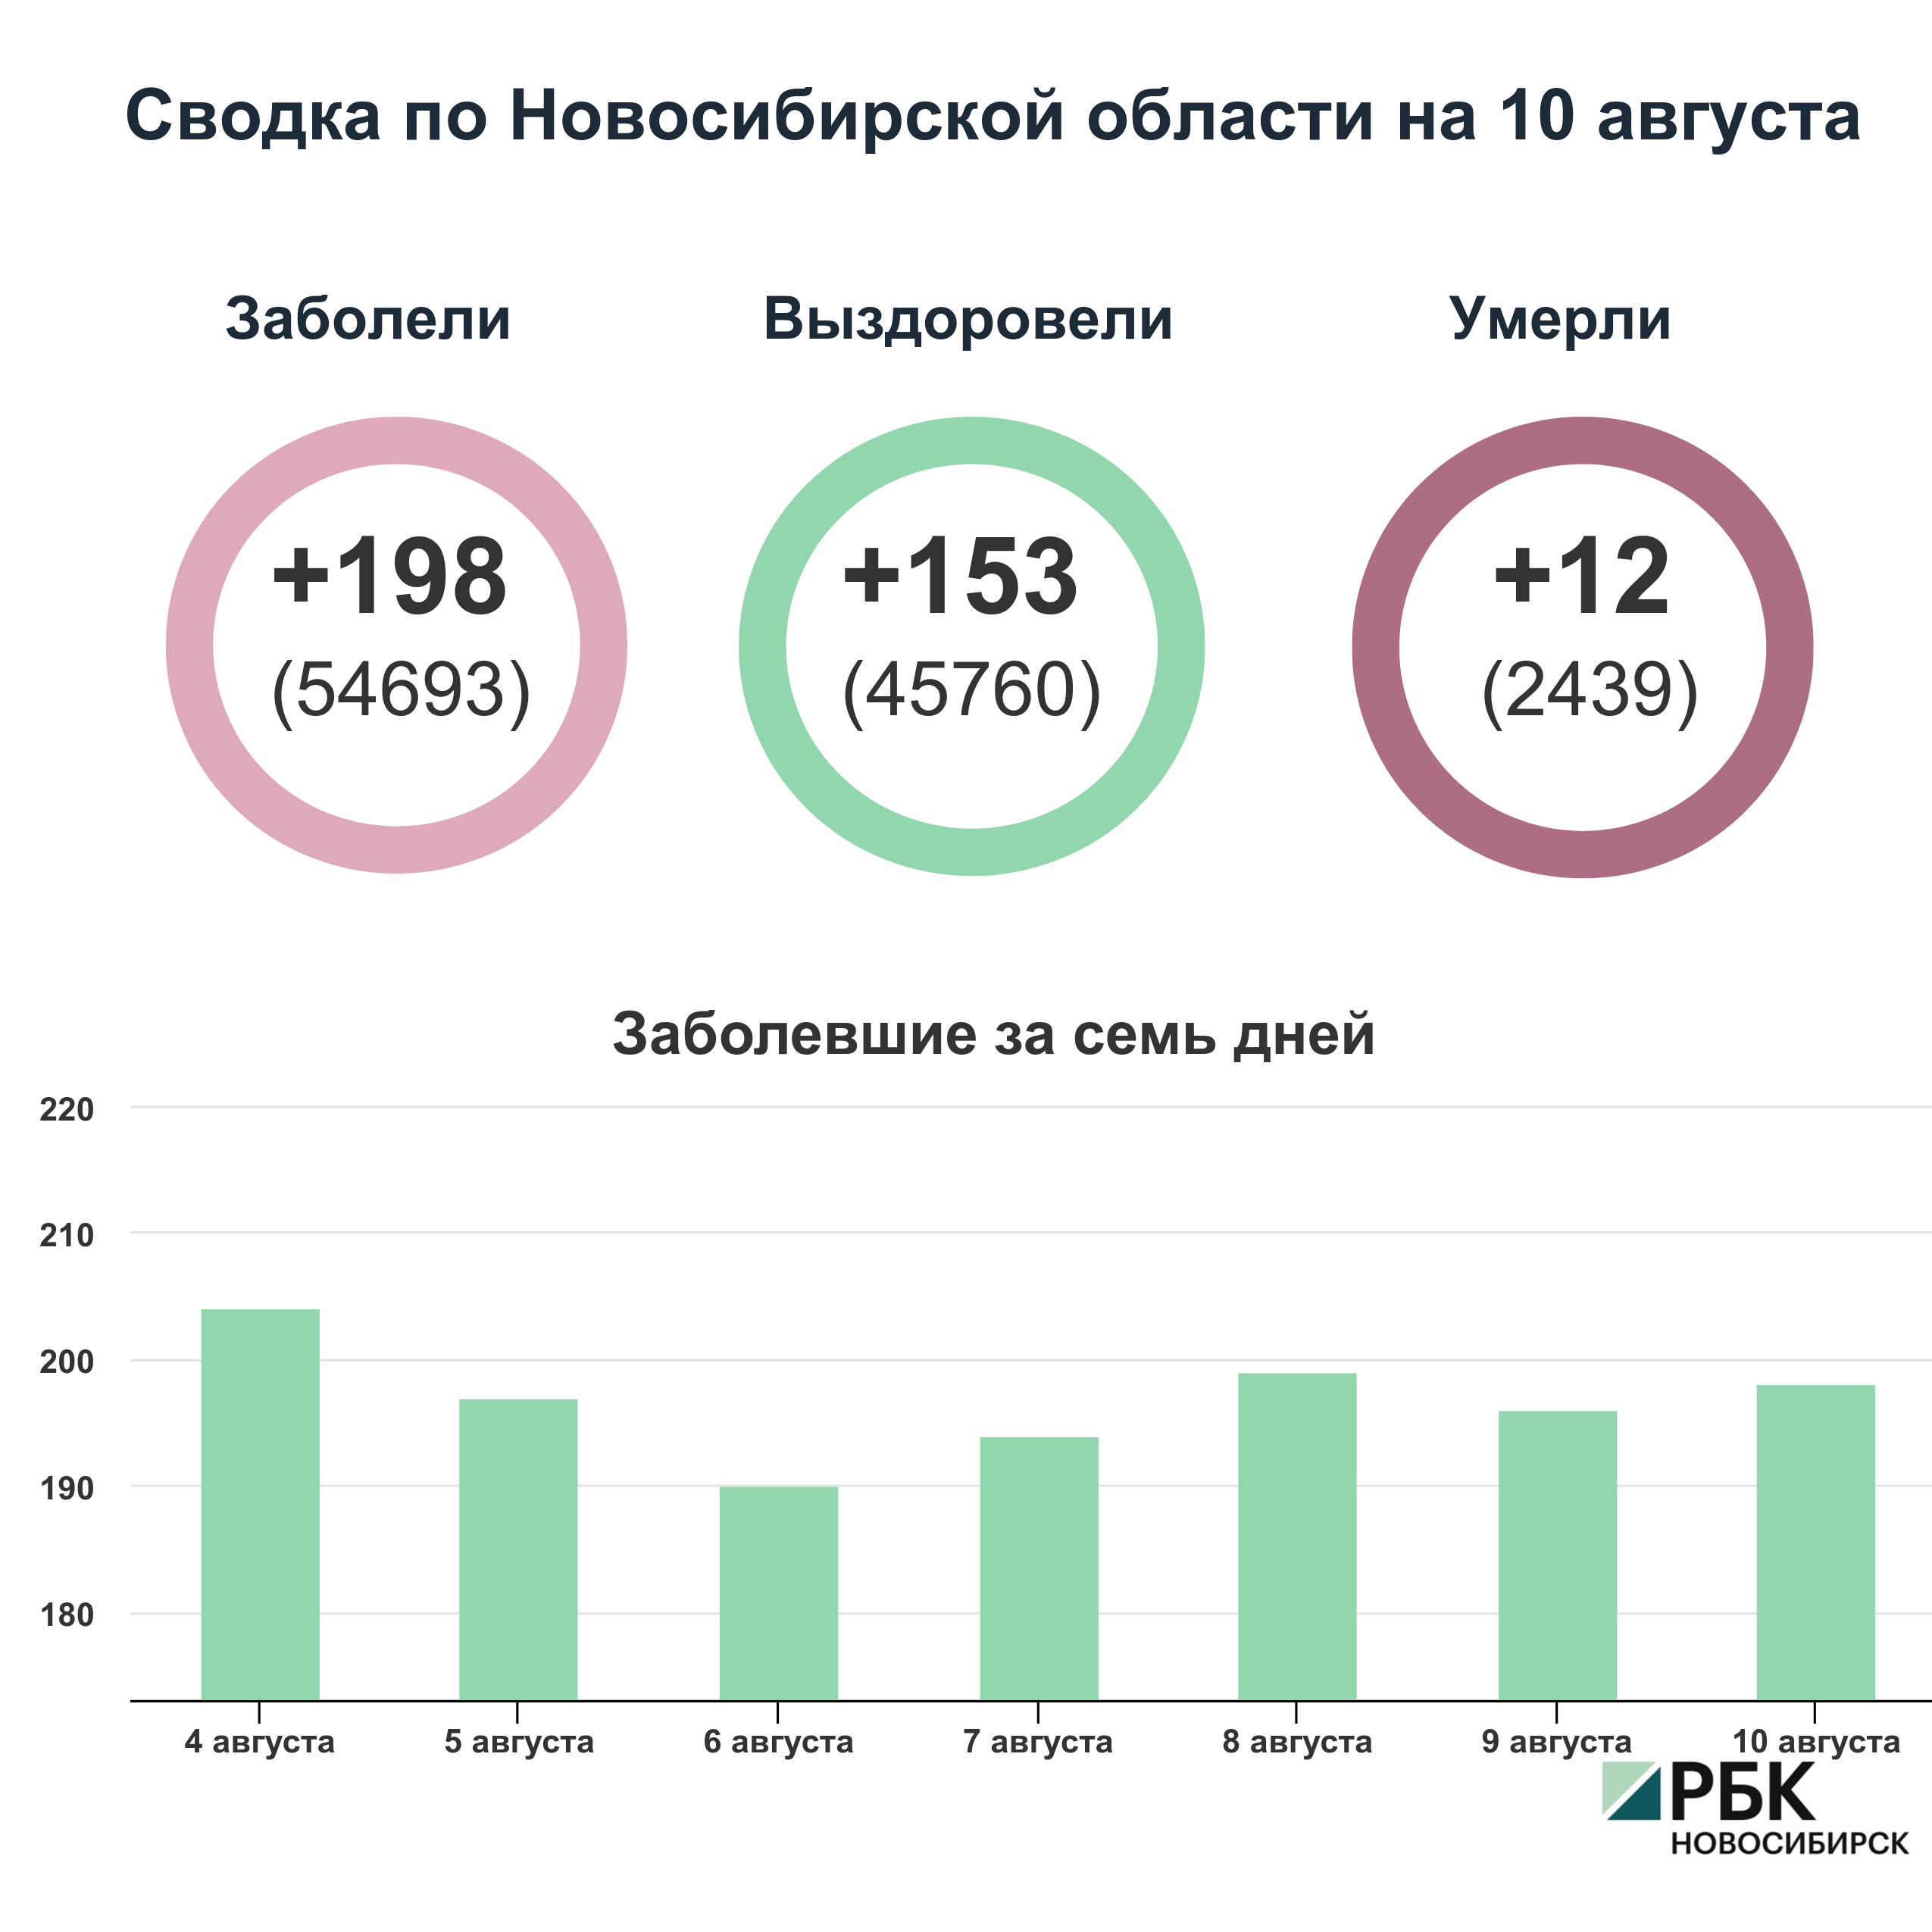 Коронавирус в Новосибирске: сводка на 10 августа